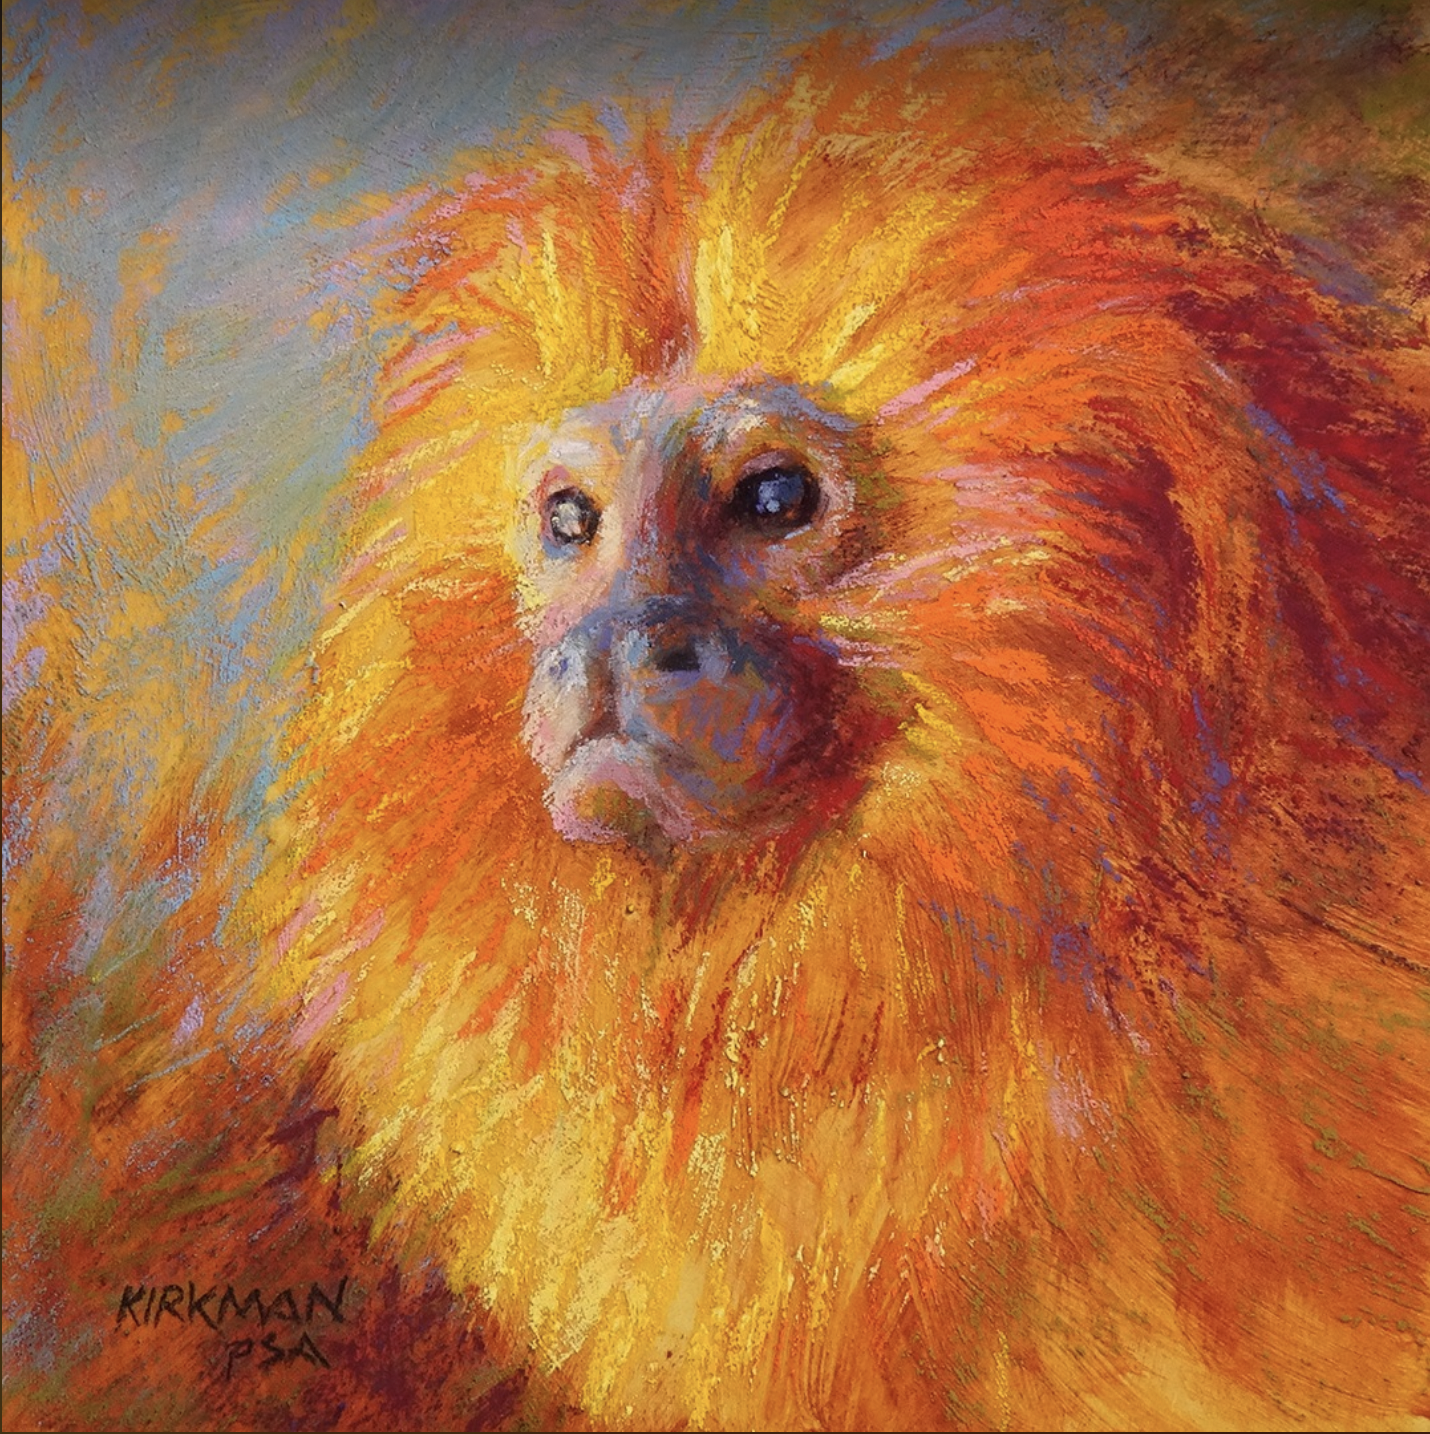 Monkey Day-Rita Kirkman, "Golden Tamarin," pastel, 6 x 6 in.